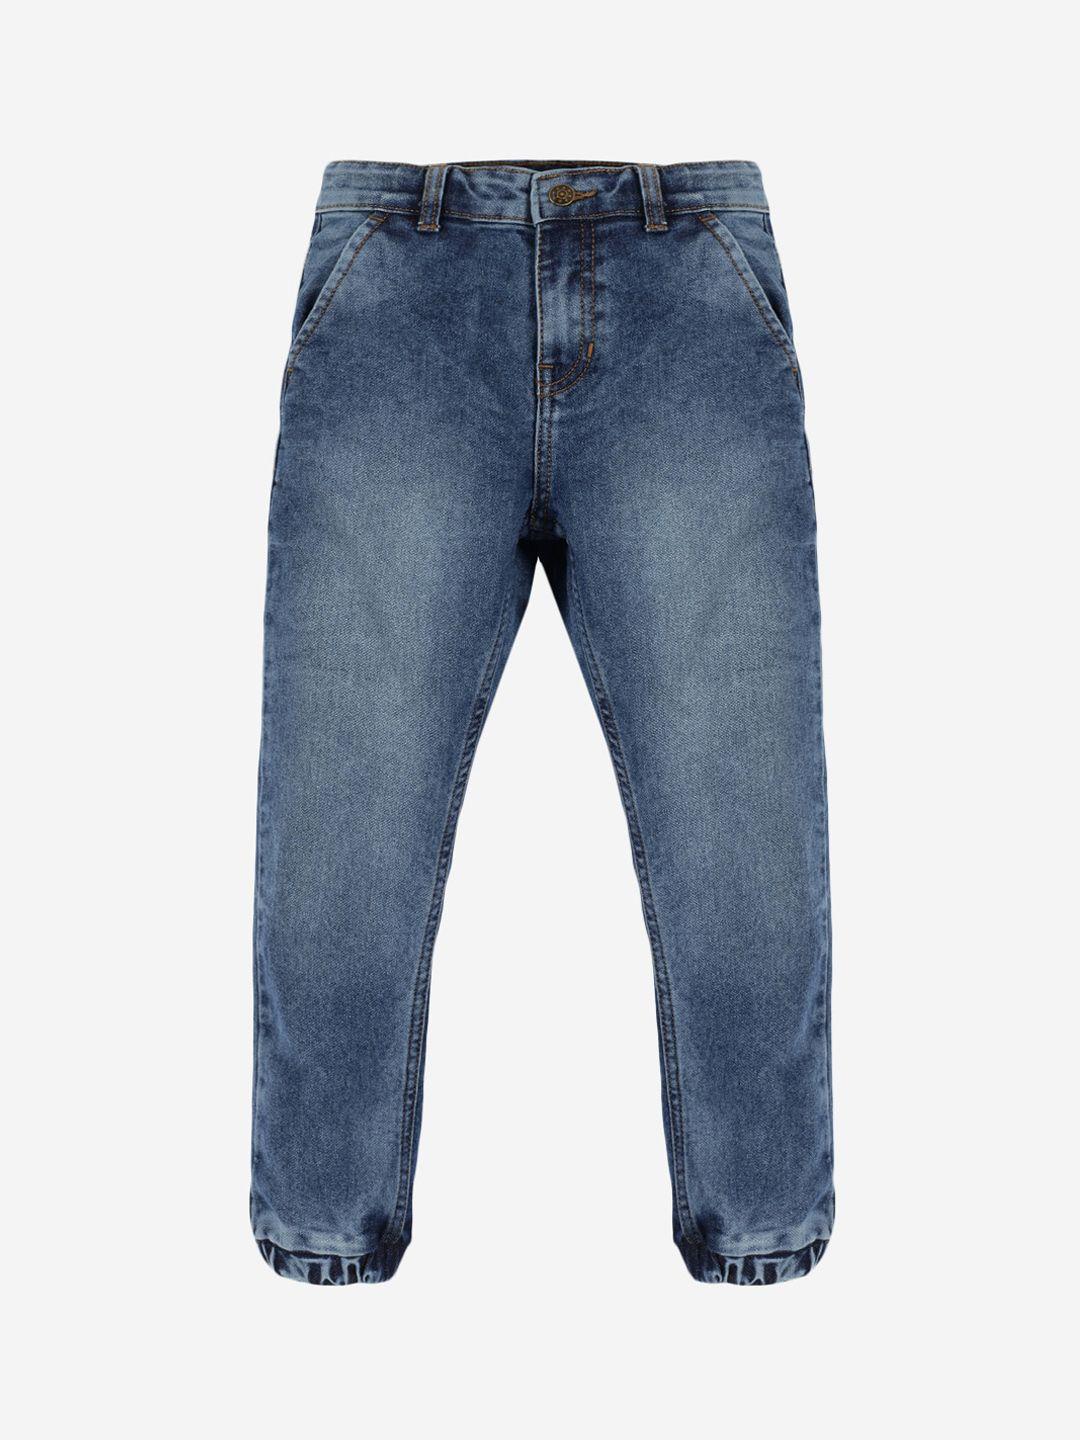 kiddopanti-kids-boys-blue-jean-jogger-light-fade-denim-jeans